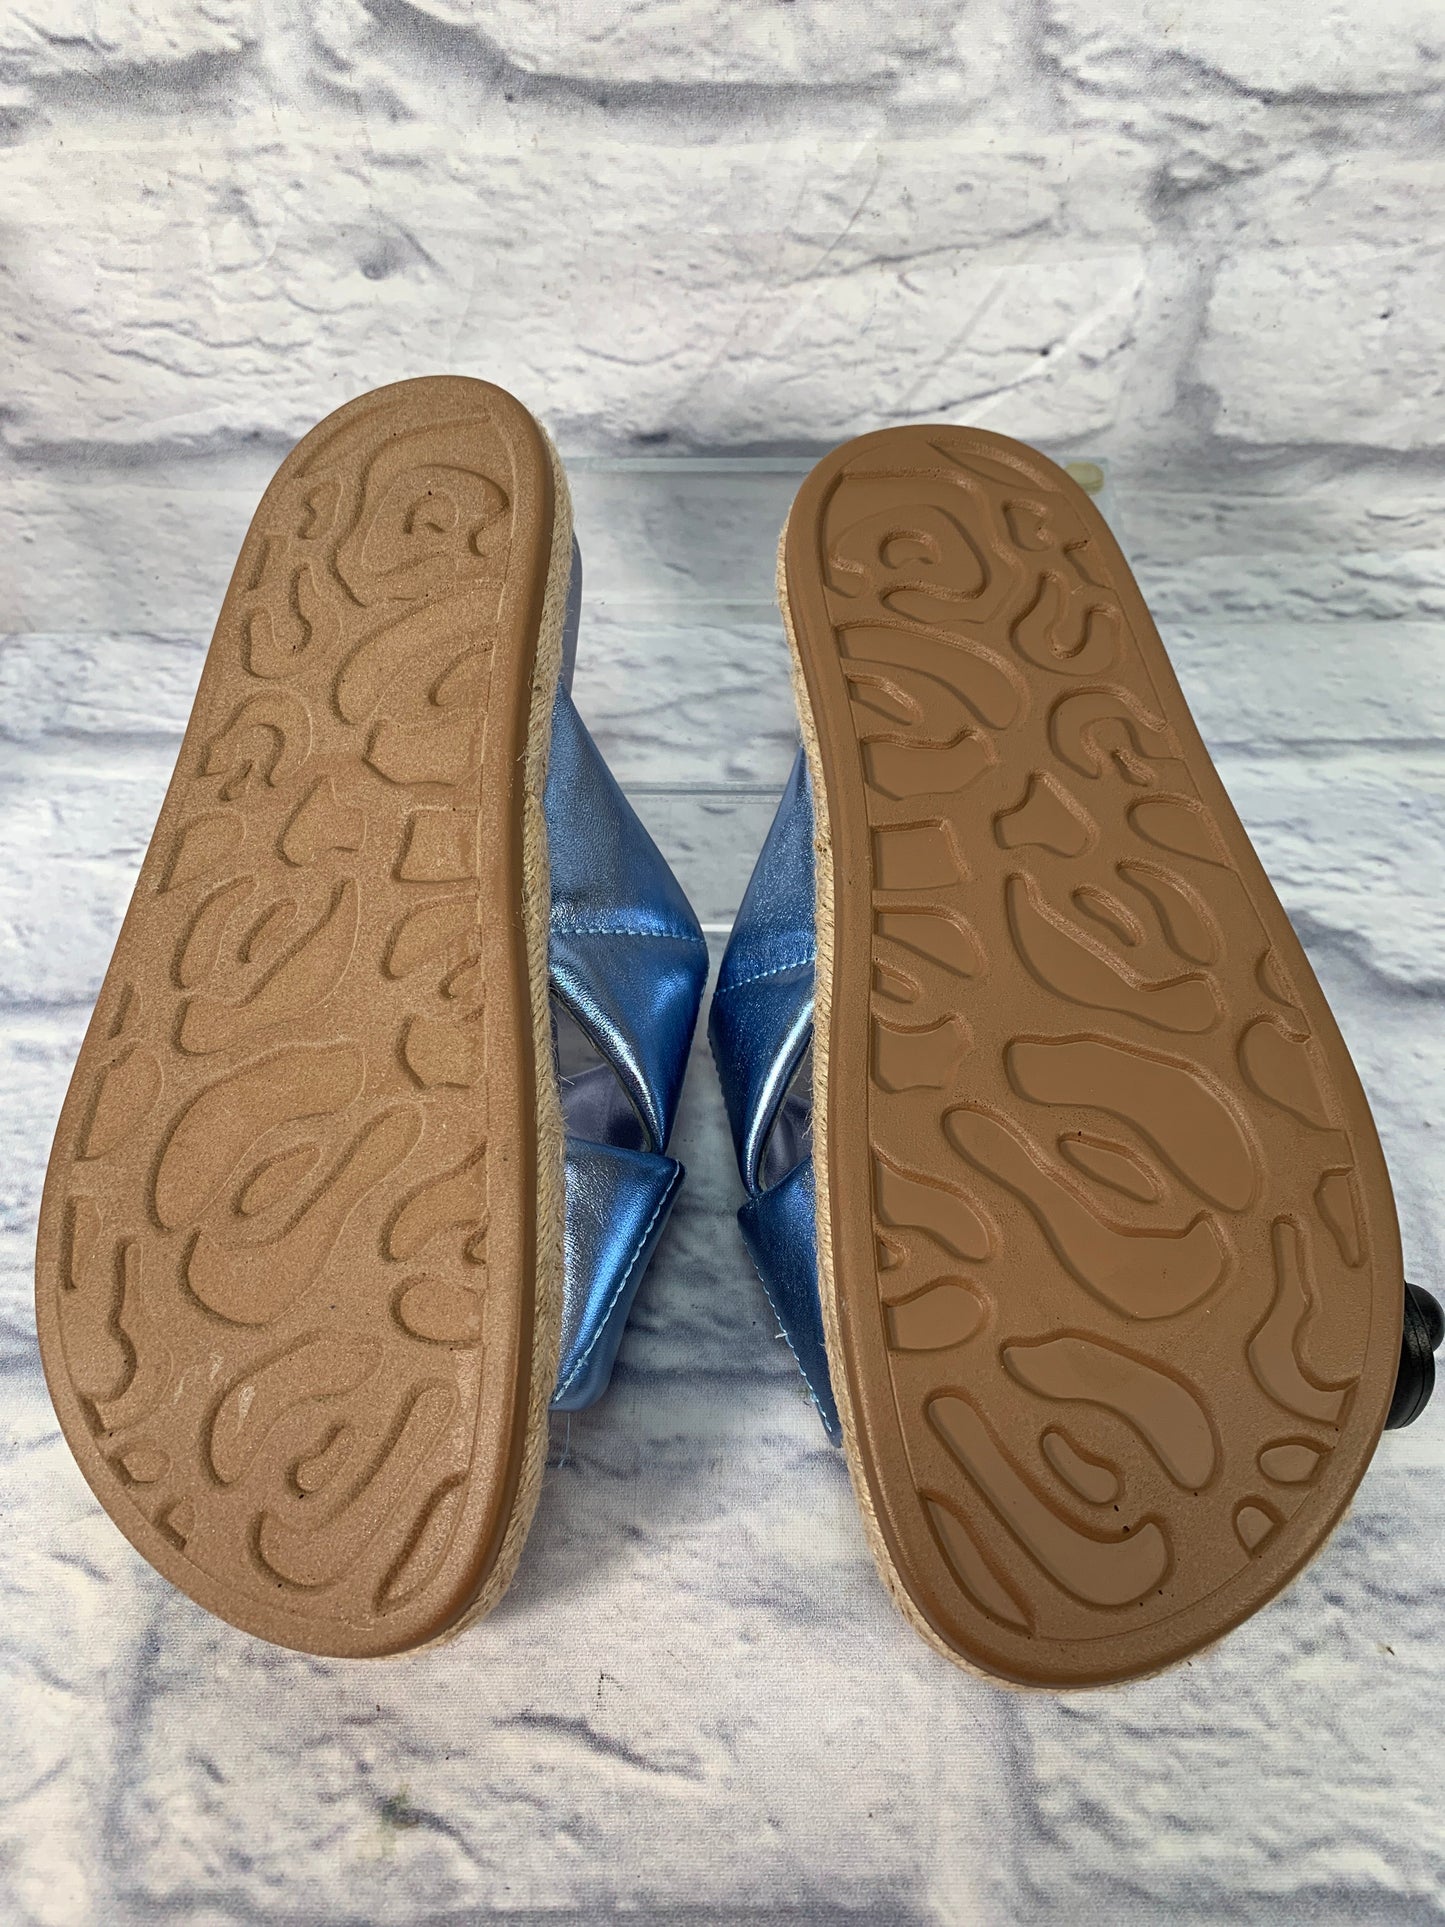 Sandals Flats By Aerosoles  Size: 7